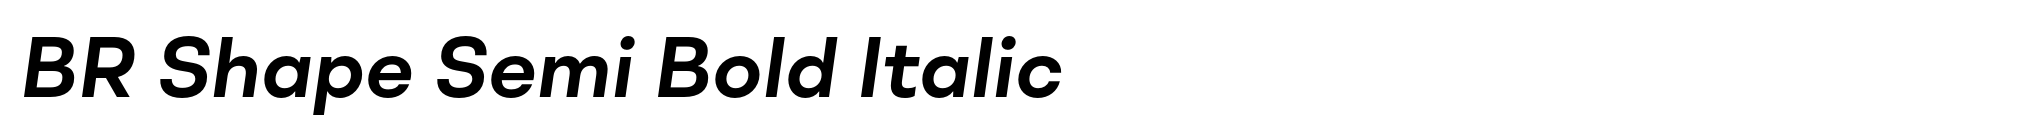 BR Shape Semi Bold Italic image